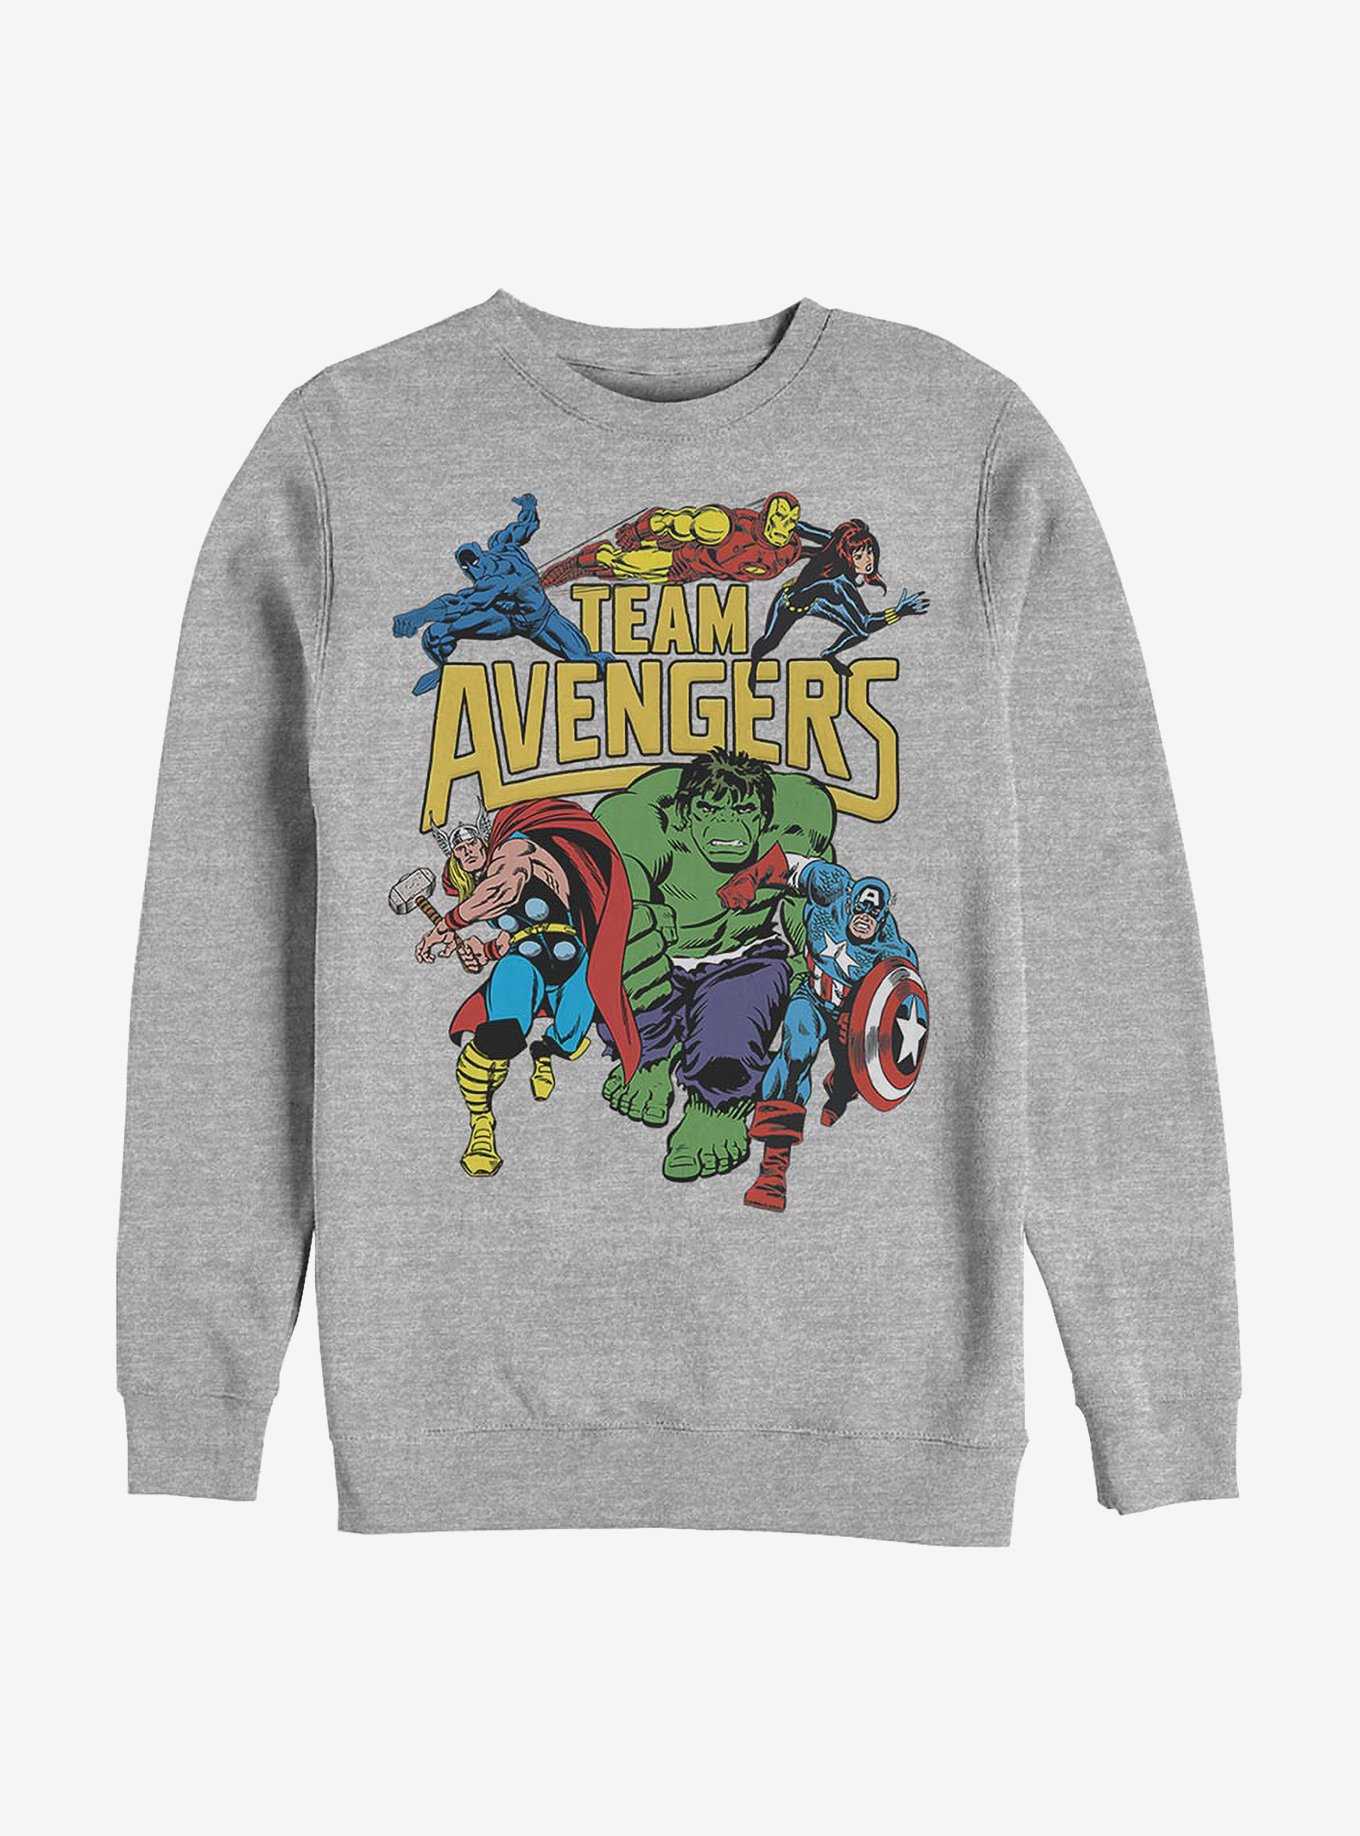 Marvel Avengers Team Avengers Assemble Crew Sweatshirt, , hi-res